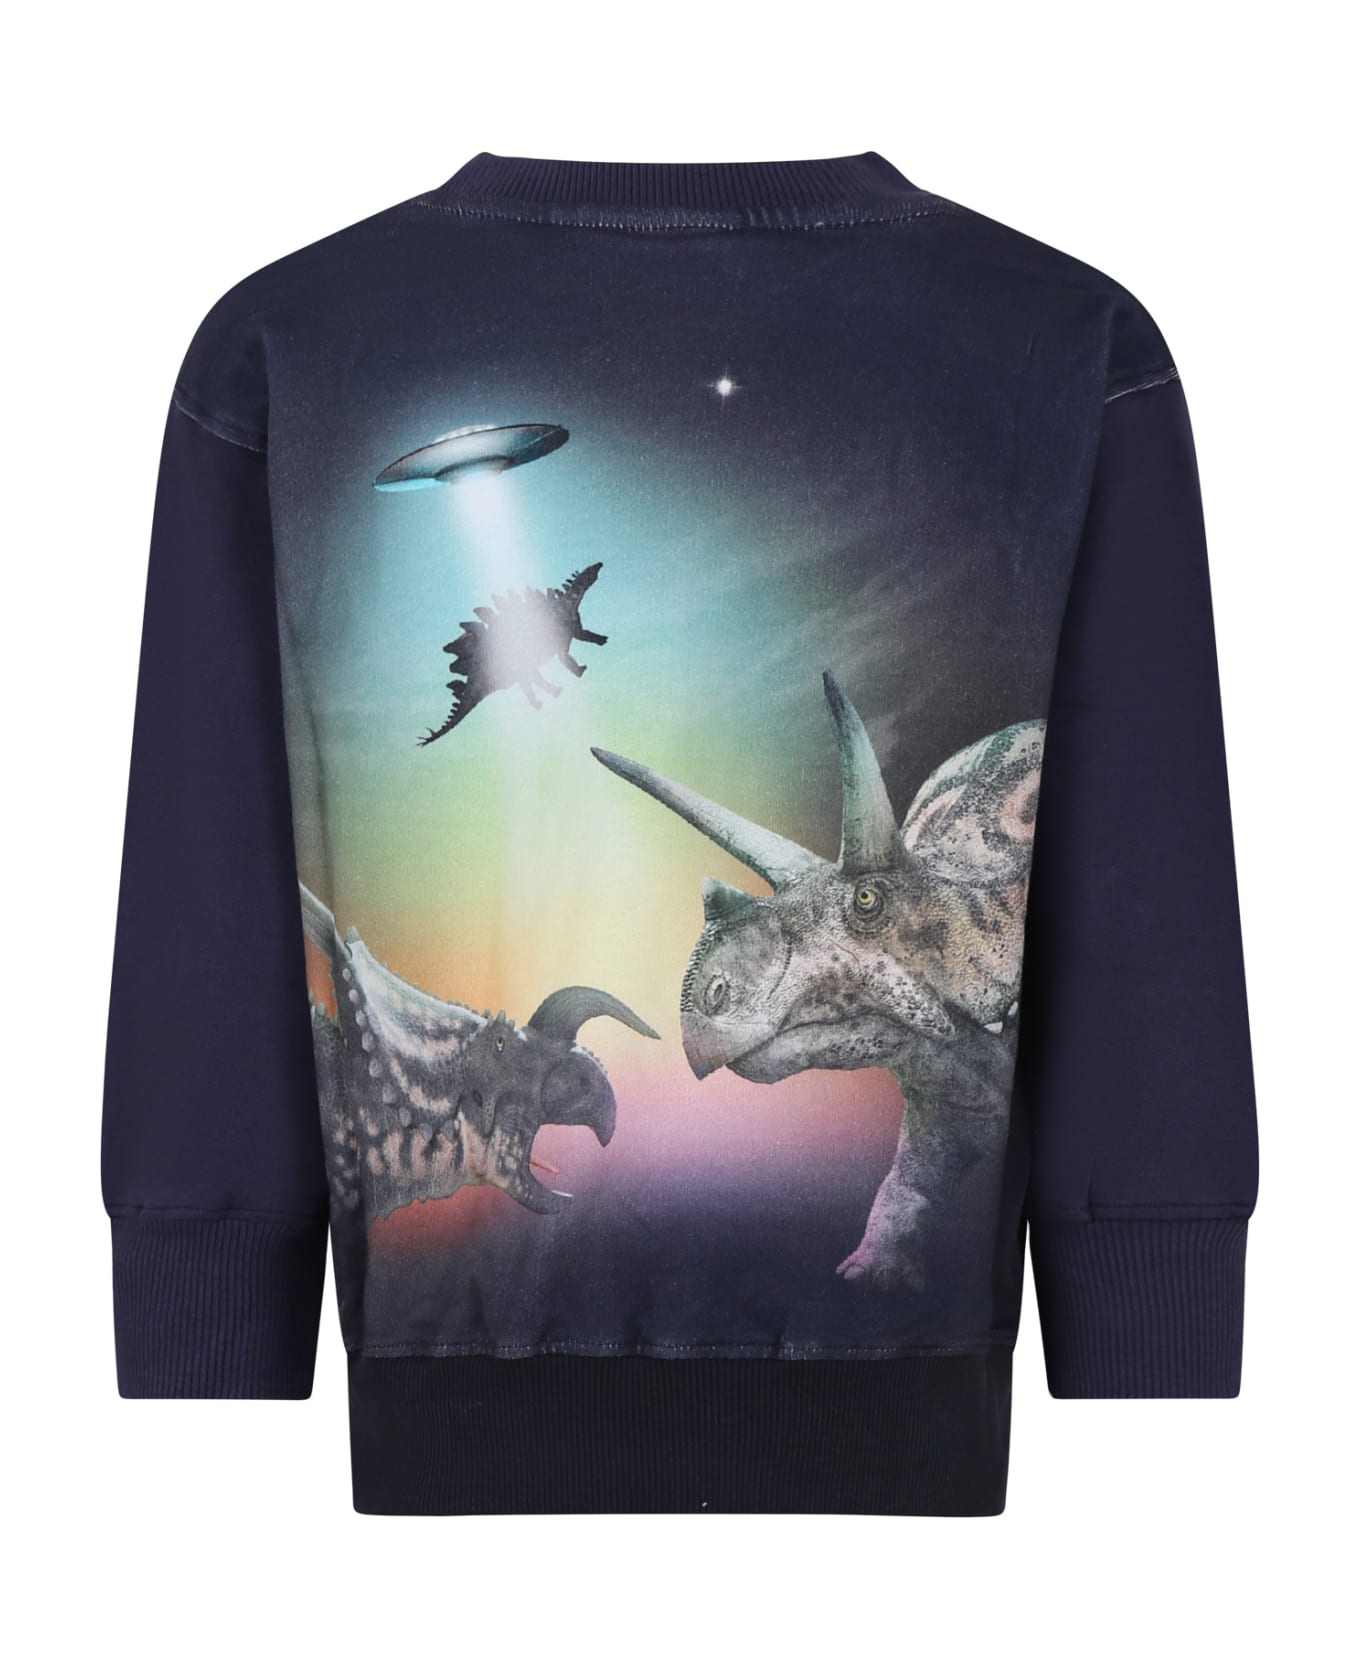 Molo Blue Sweatshirt For Boy With Dinosaurs - Blue